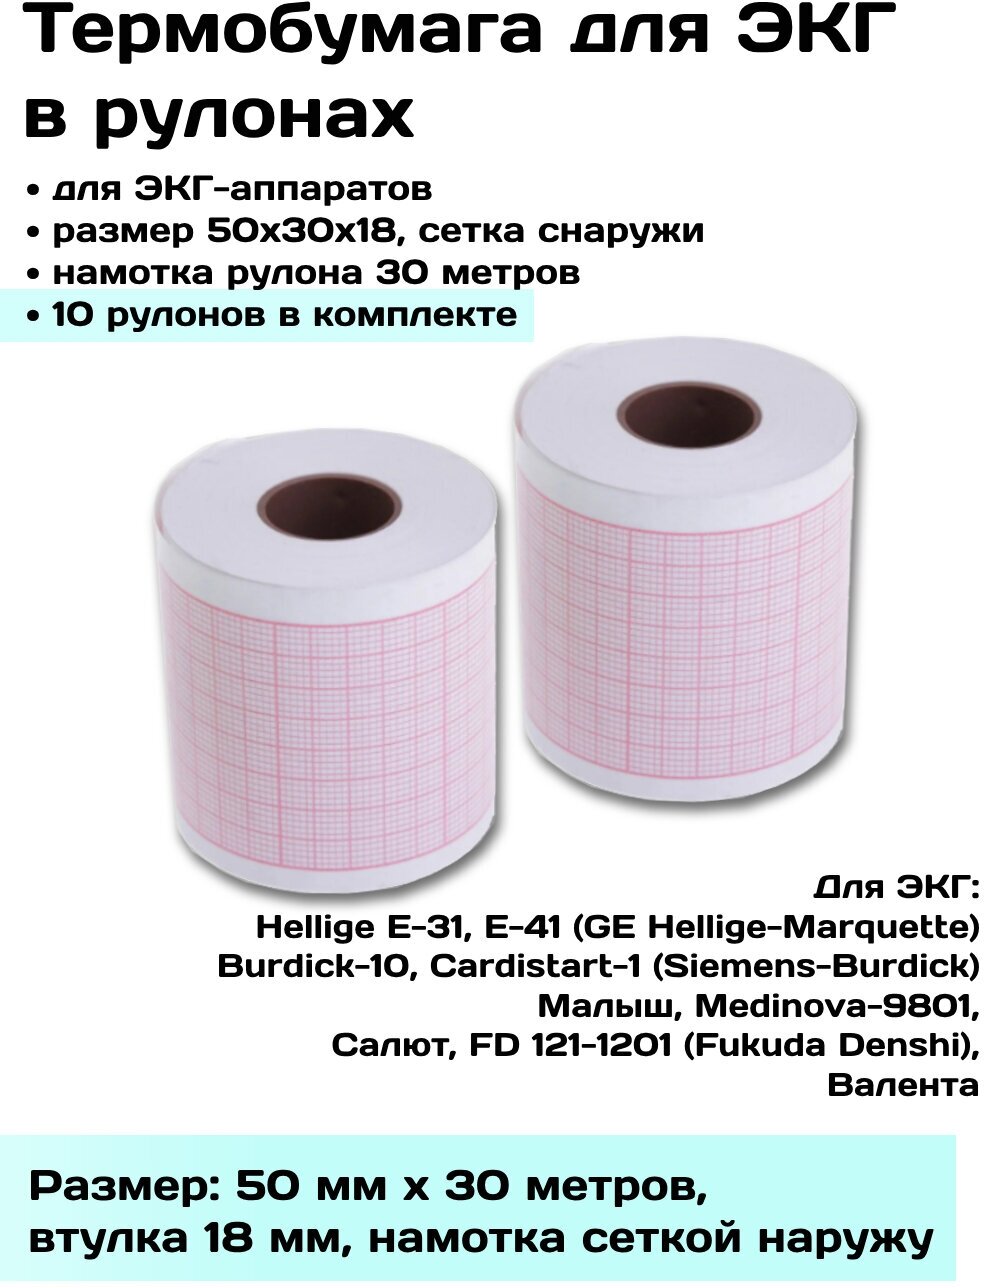 Термобумага ЭКГ в рулонах 50х30х18 наружн - 10 рулонов, лента, бумага регистрирующая ЭКГ